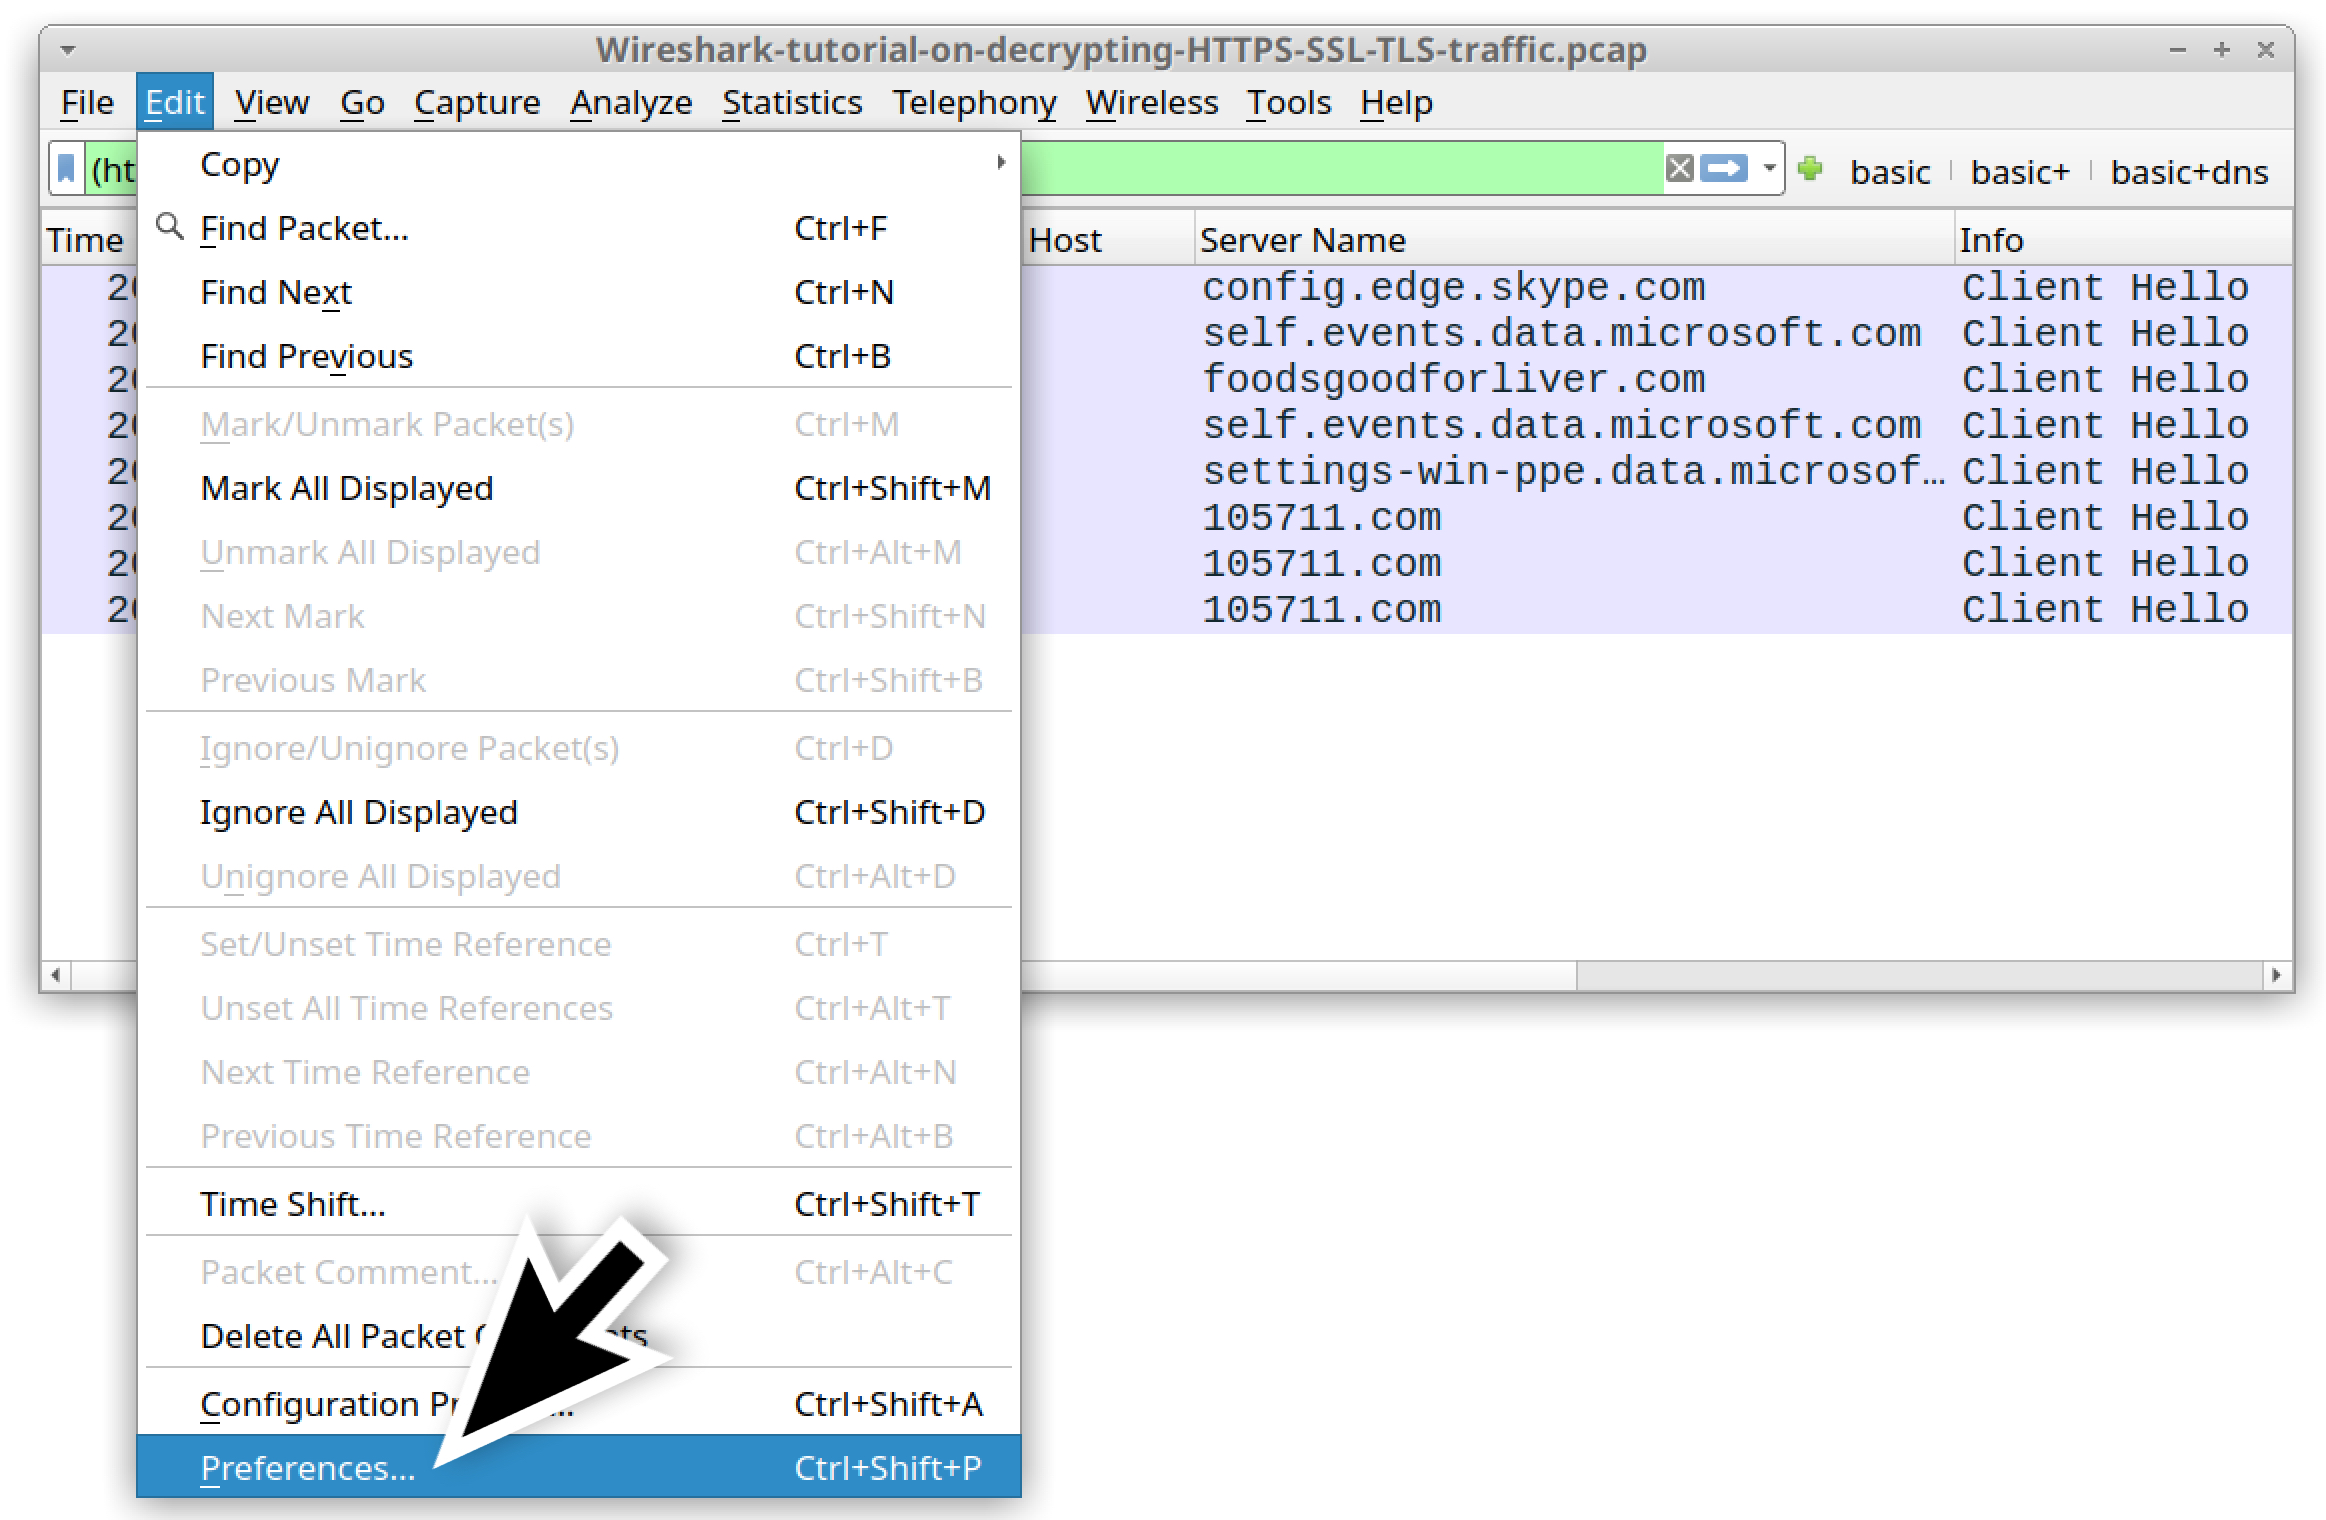 Wireshark-tutorial-on-decrypting-HTTPS-SSL-TLS-traffic.pcap を Wireshark で開いて[編集] メニュー（Mac OS の場合は [Wireshark] メニュー）以下の [Preferences] を開いたところを表示。